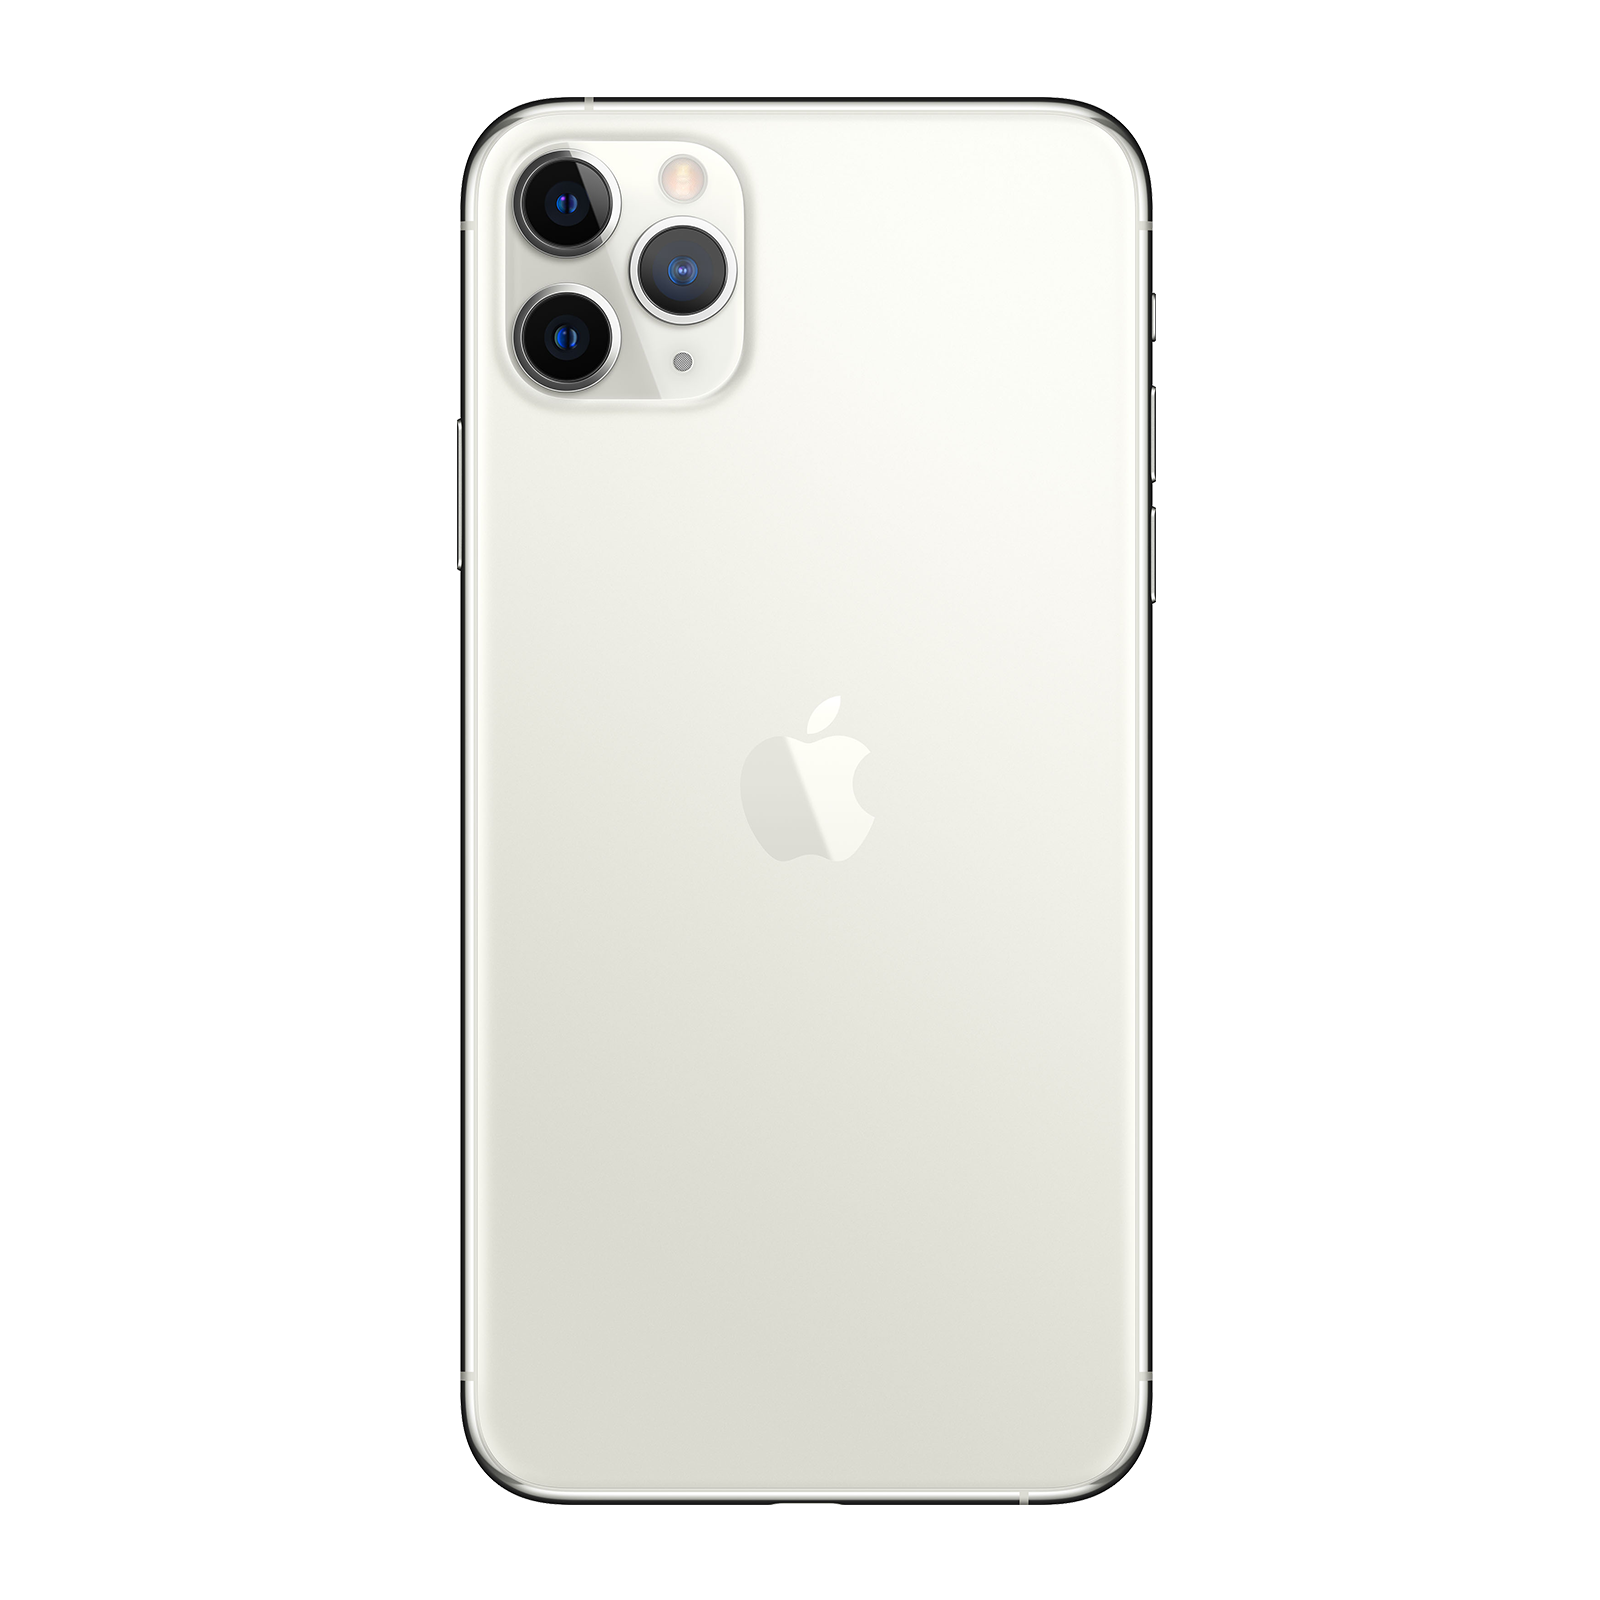 Apple iPhone 11 Pro Max 256GB Silver Fair - T-Mobile